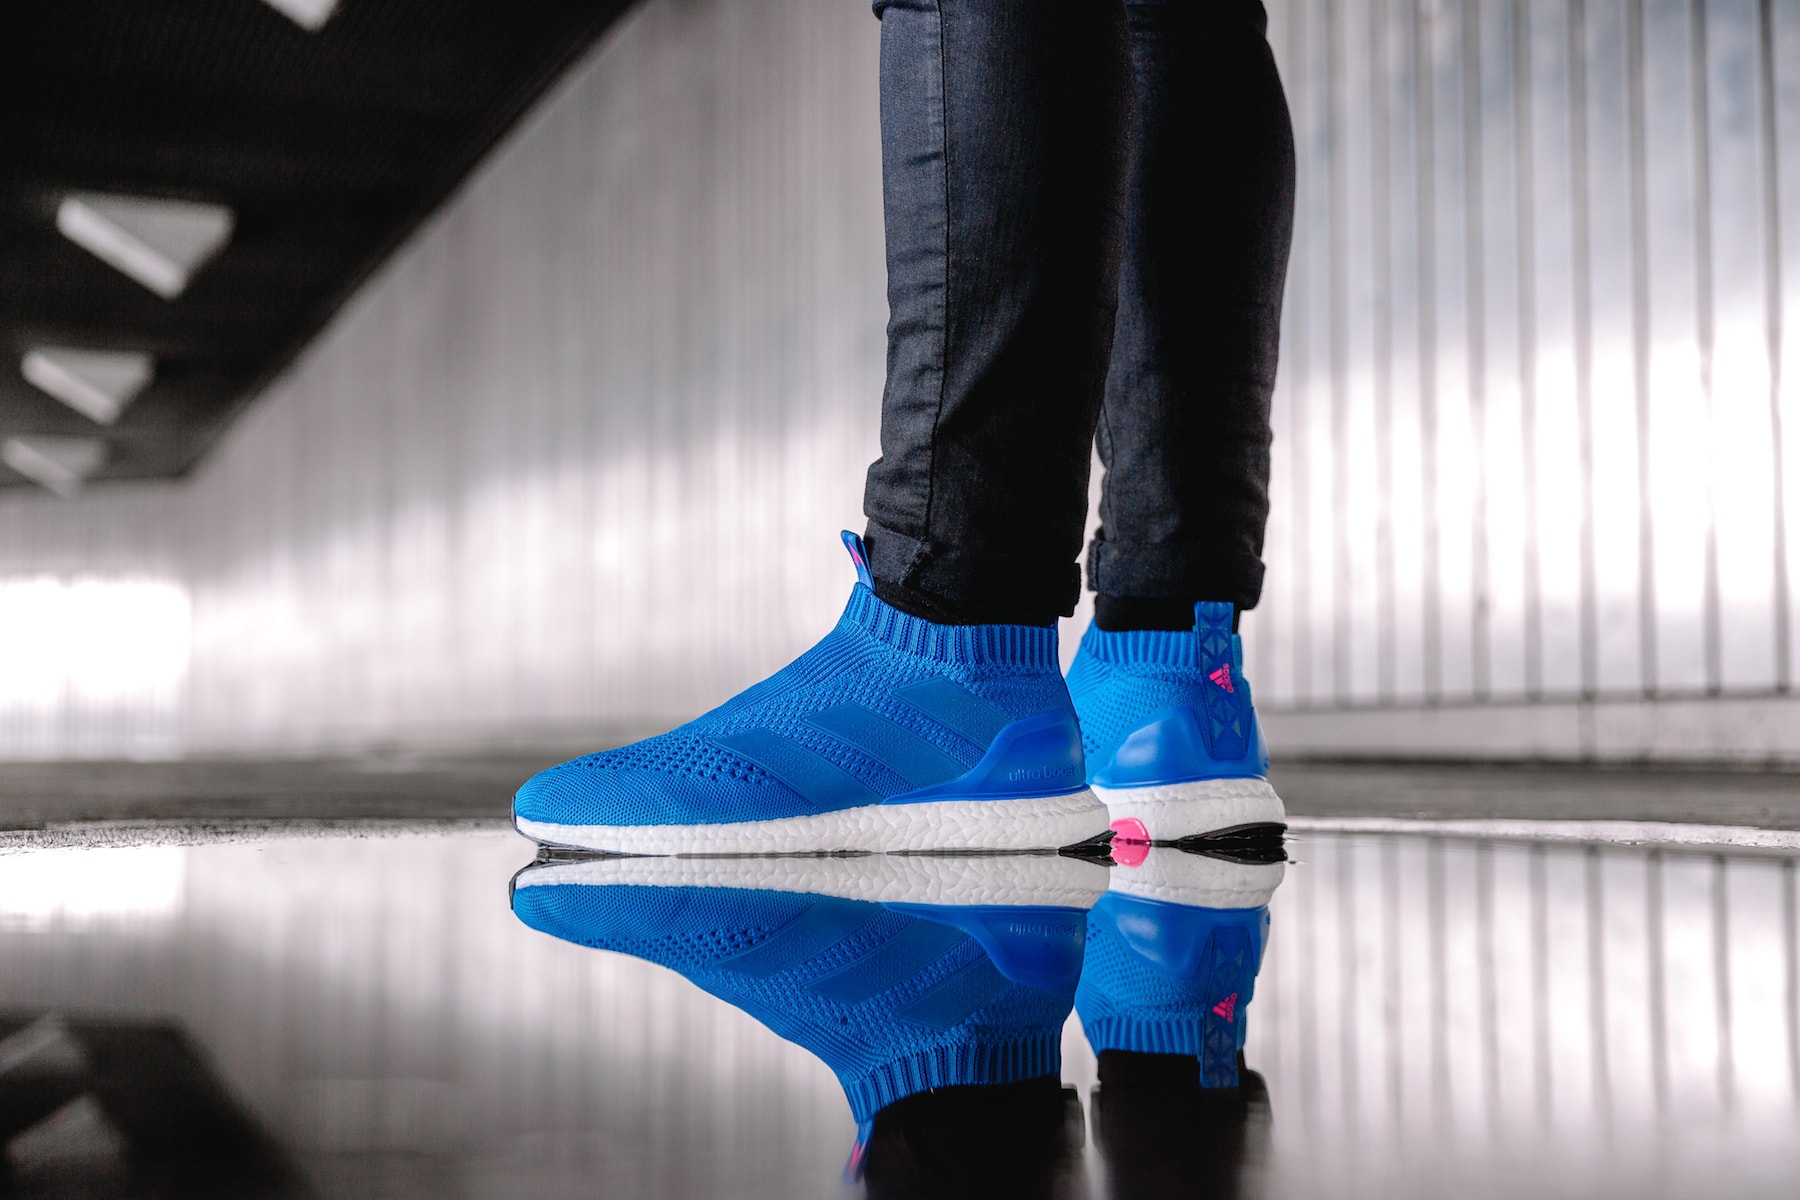 adidas ACE 16+ PureControl UltraBOOST “Blue Blast” On Feet